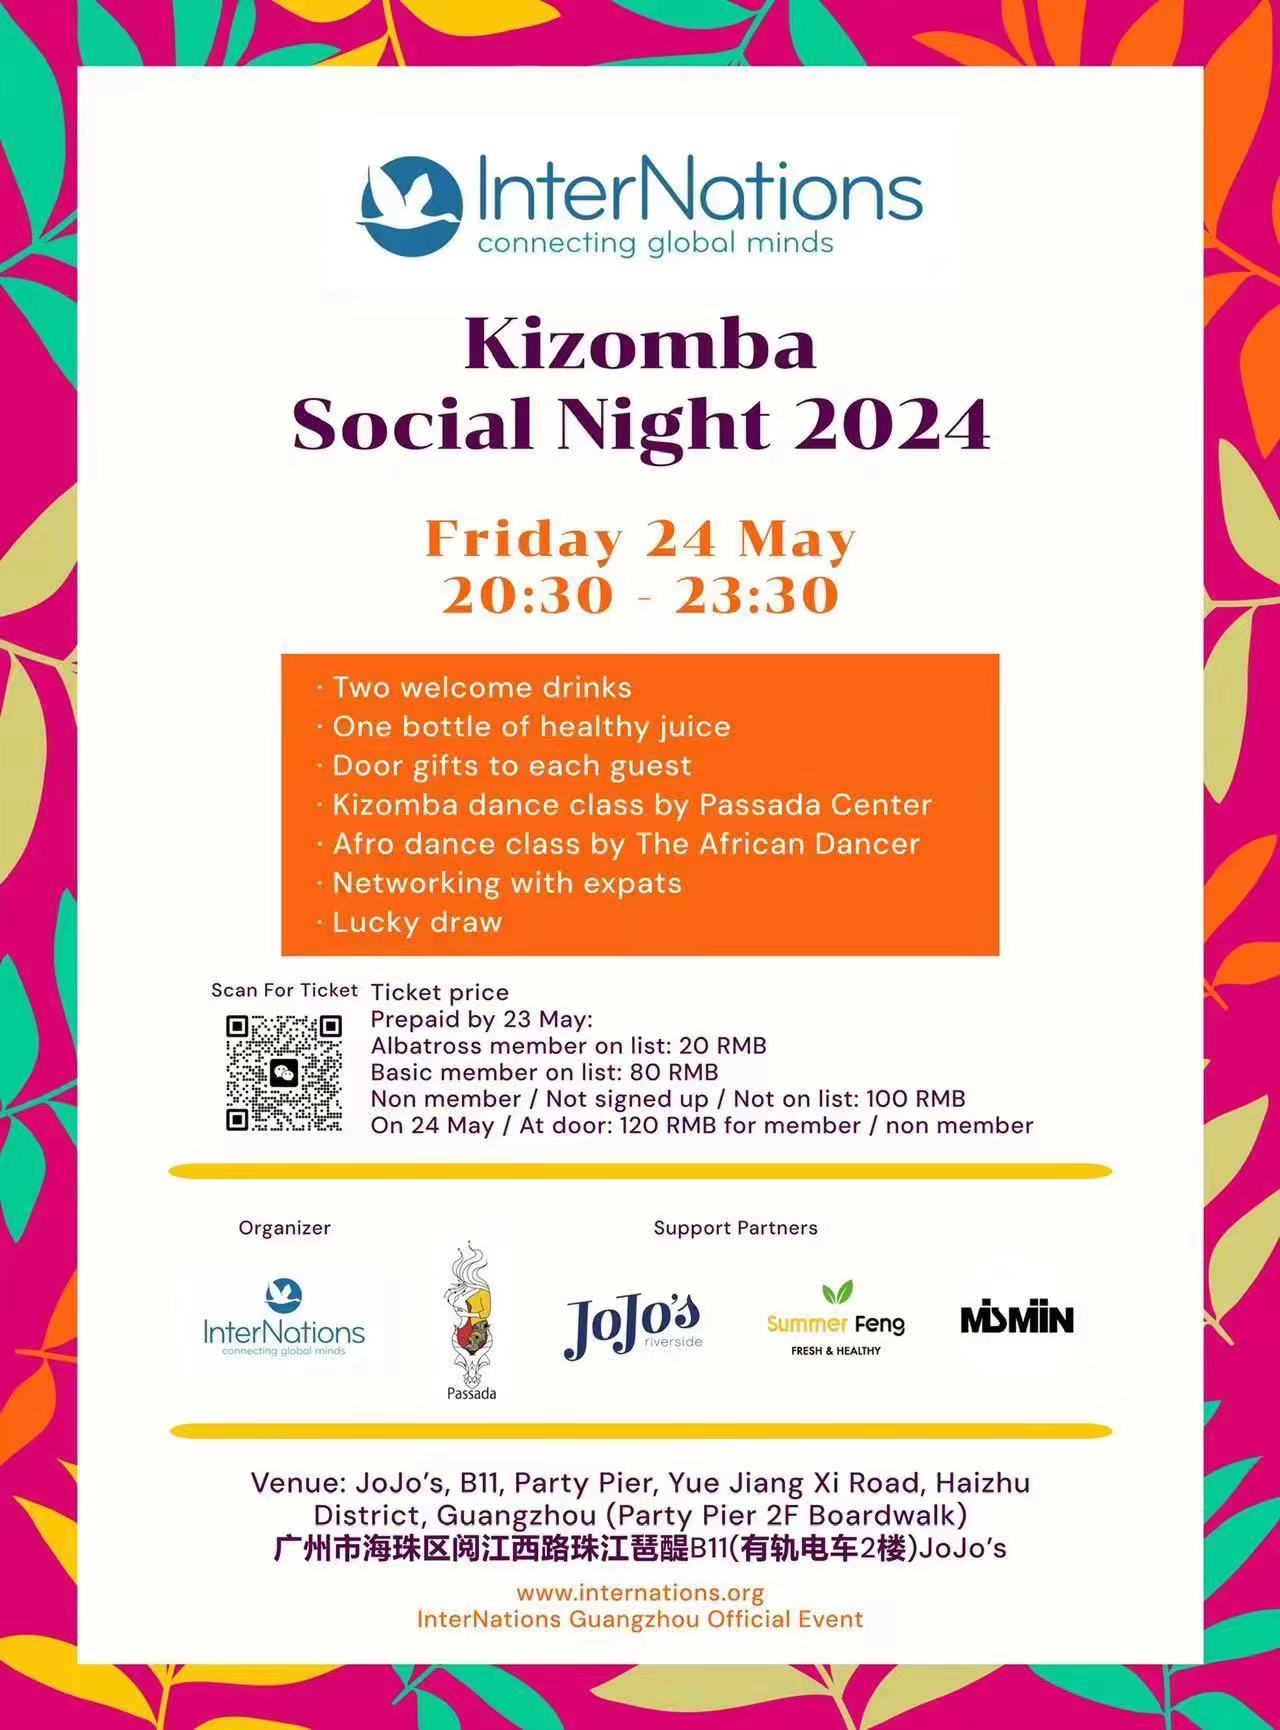 InterNations-Guangzhou-Kizomba-Social-Night-2024.jpg